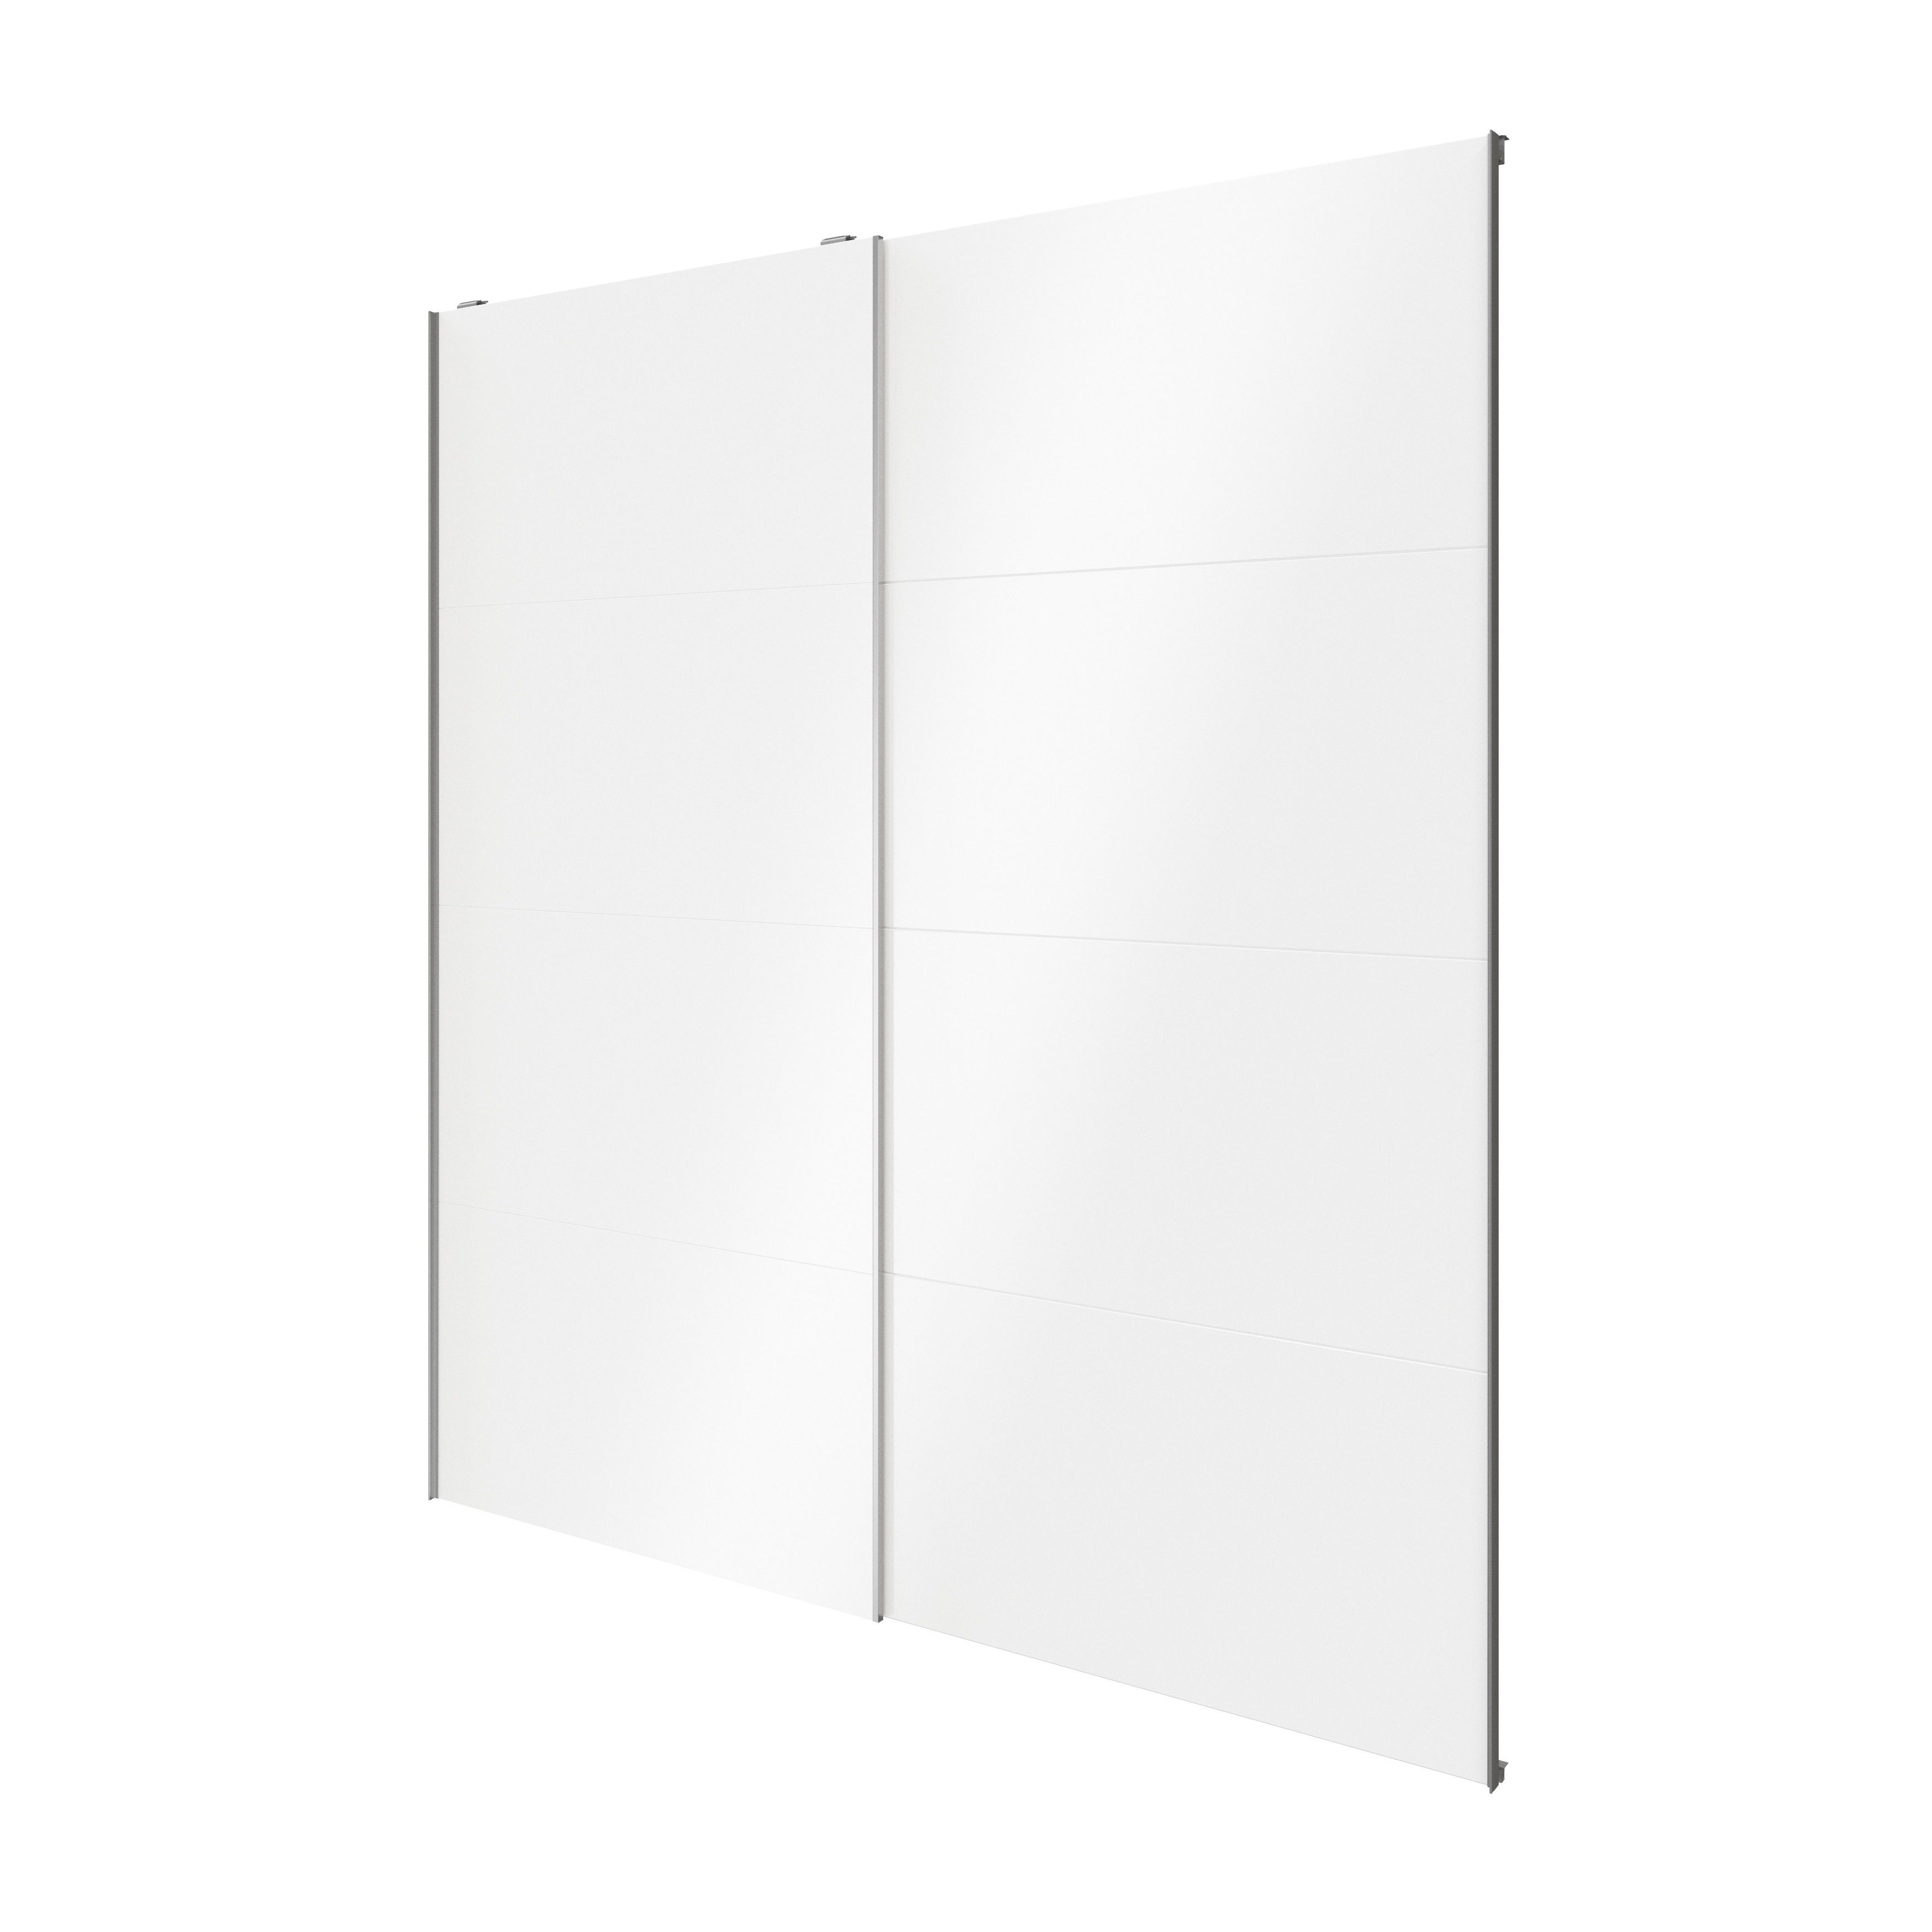 Atomia White High gloss 2 door Sliding Wardrobe Door kit (H)2250mm (W)2000mm